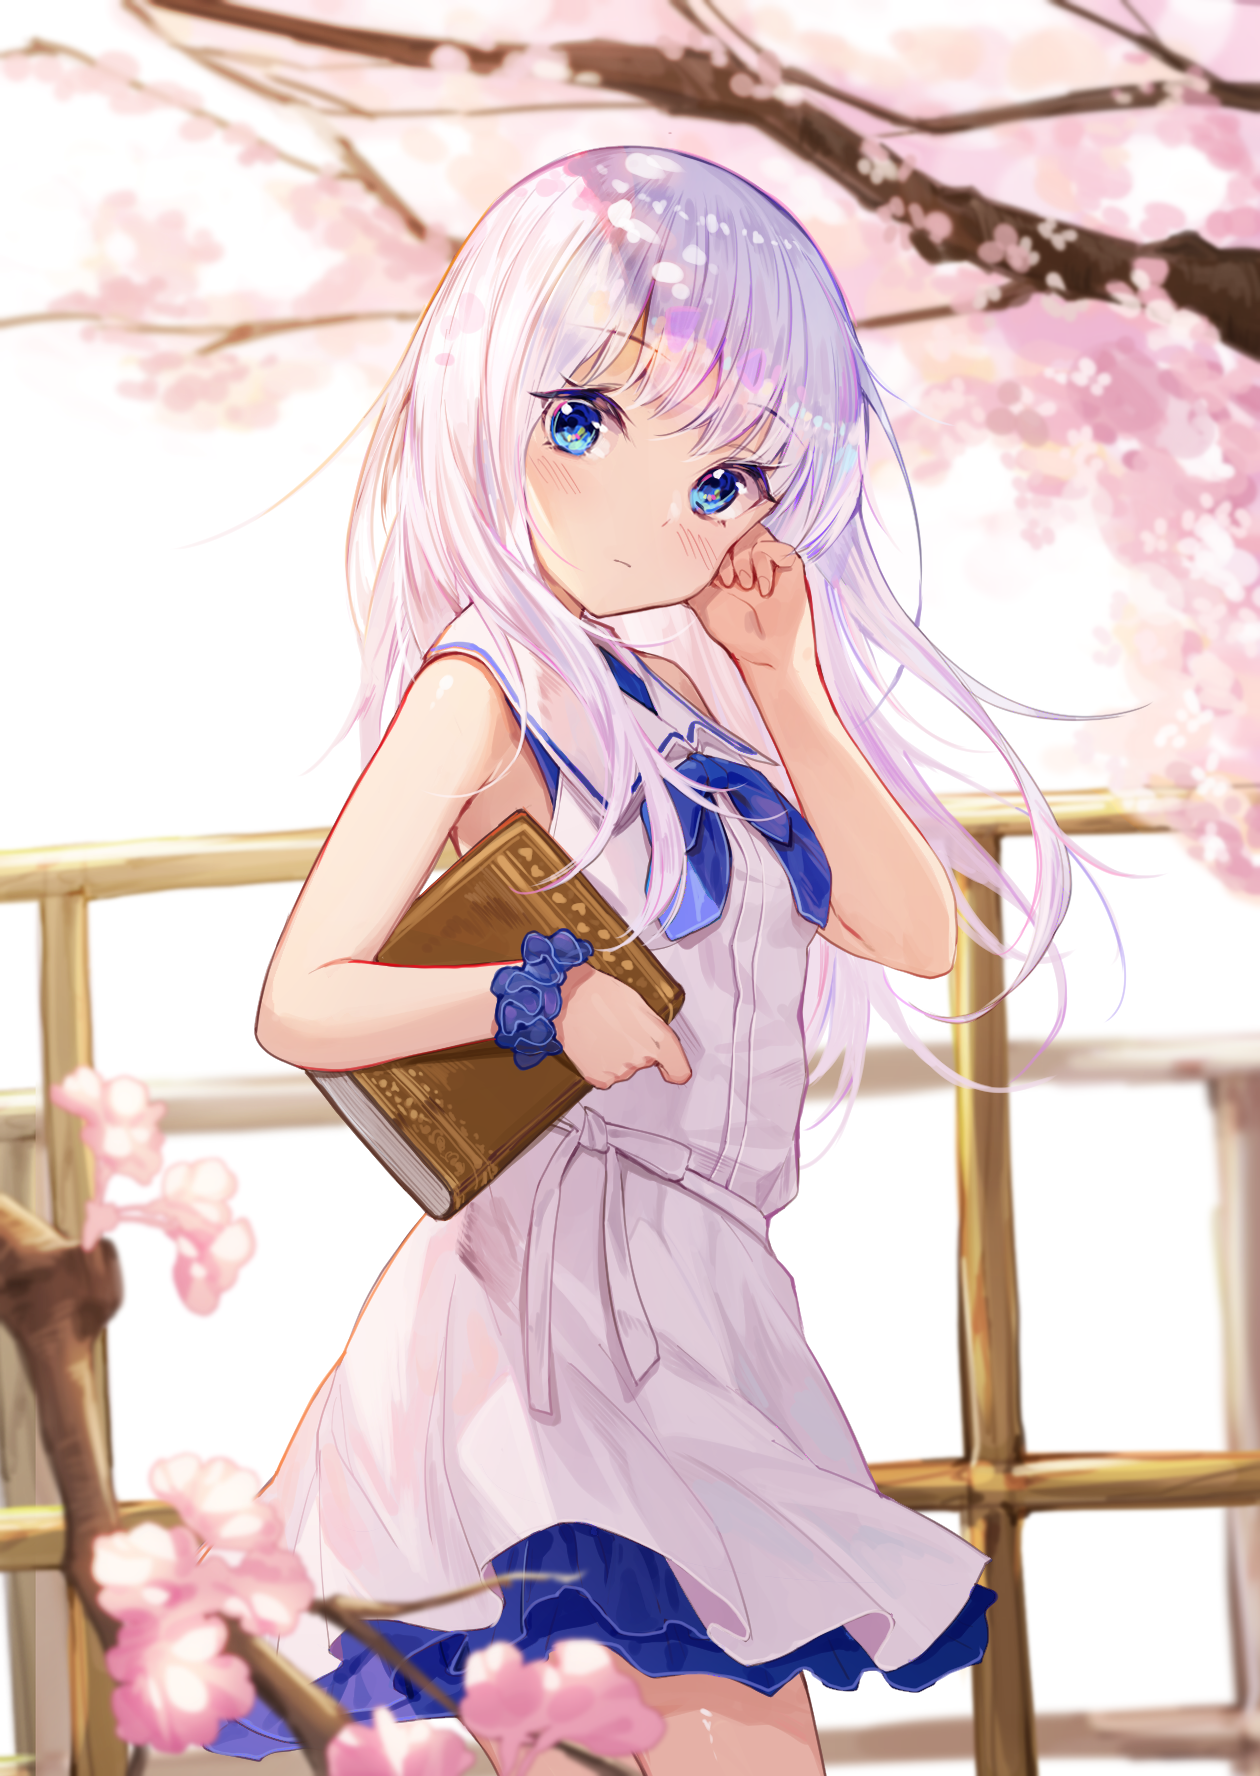 Anime 1260x1776 anime anime girls portrait display books trees long hair white hair blue eyes dress sailor uniform cherry blossom artwork Mokew